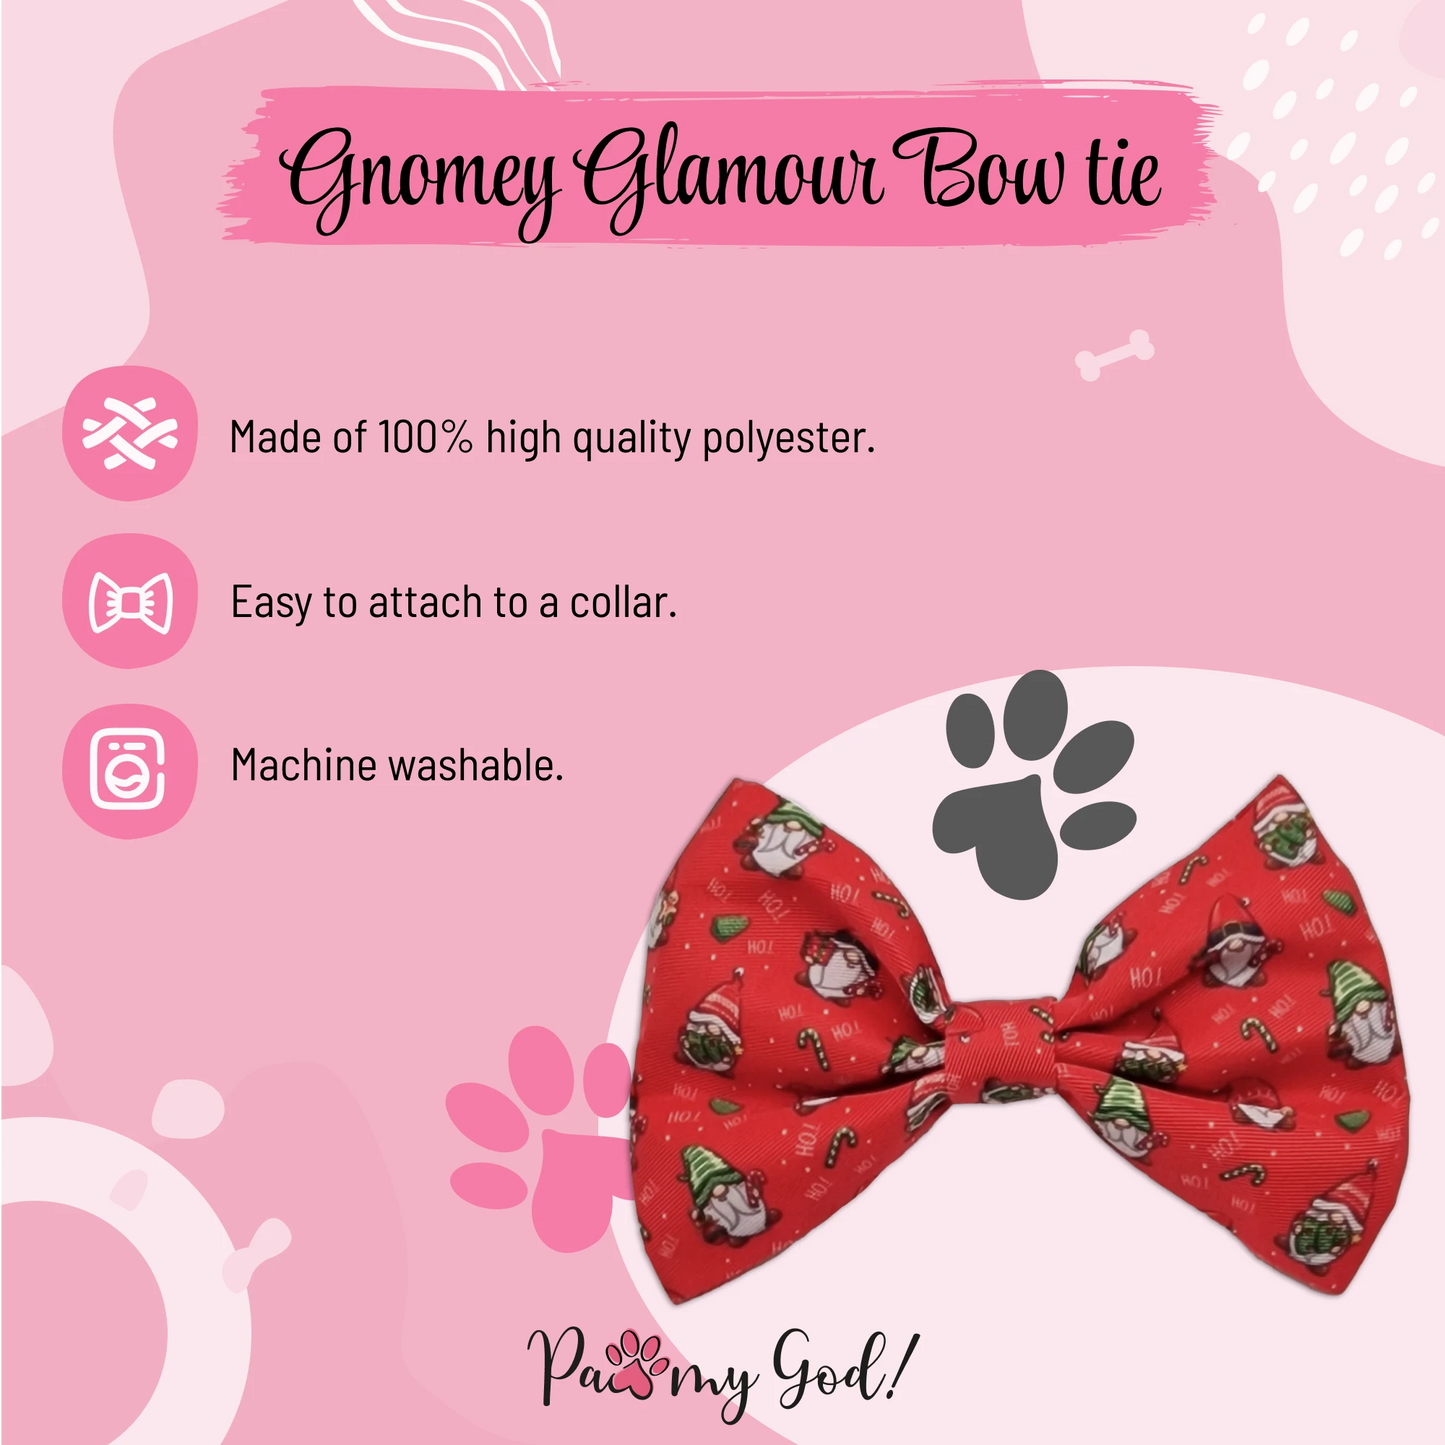 Gnomey Glamour Bow Tie